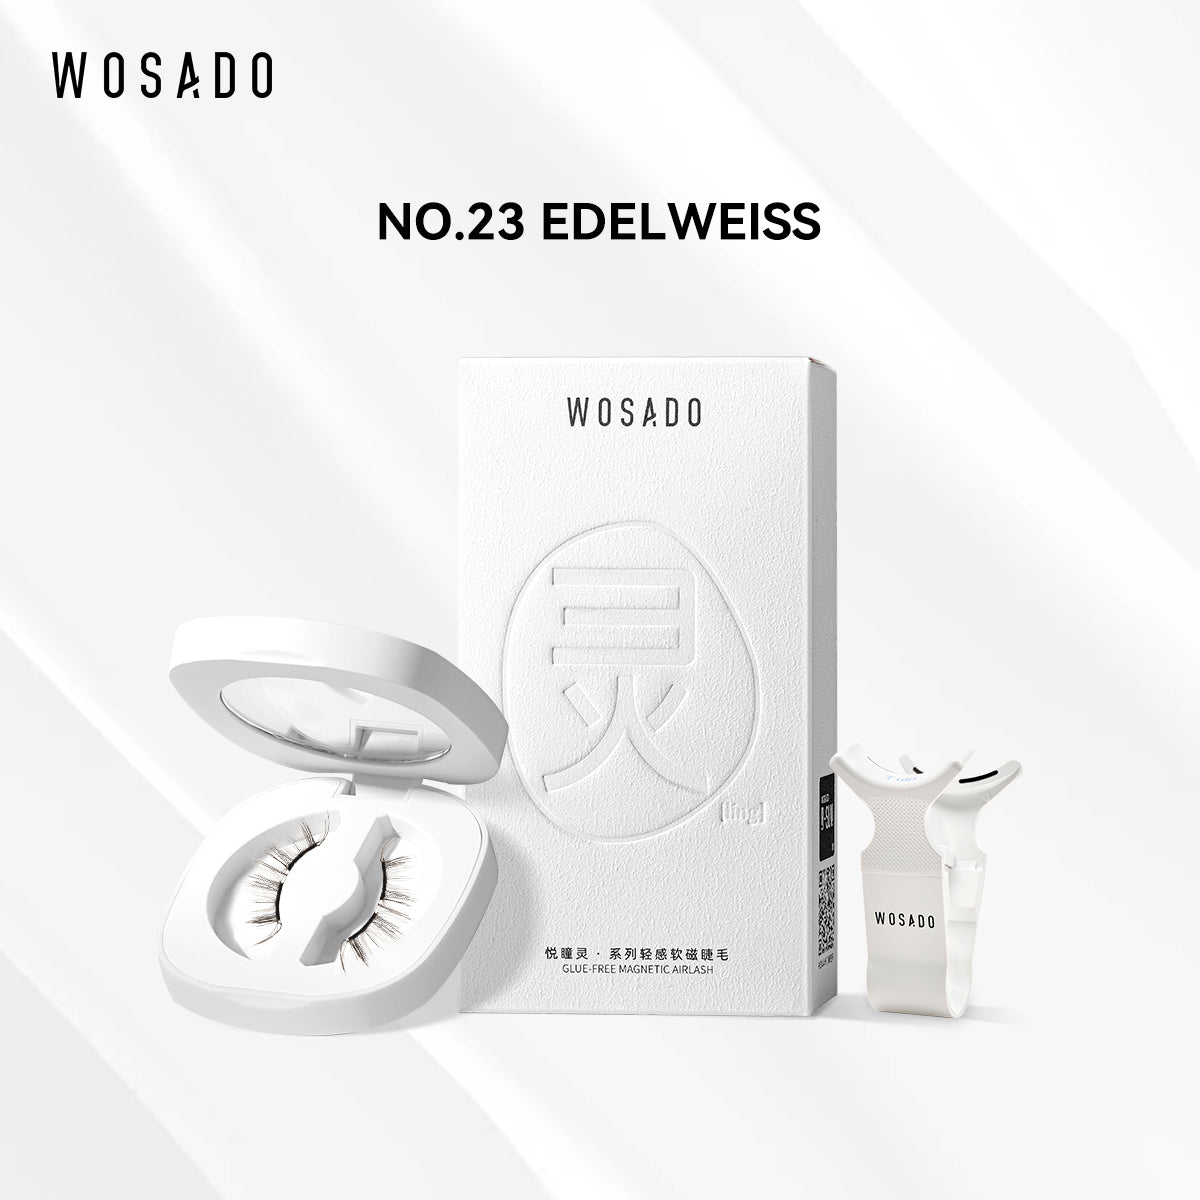 【WOSADO】NO.23 Edelweiss